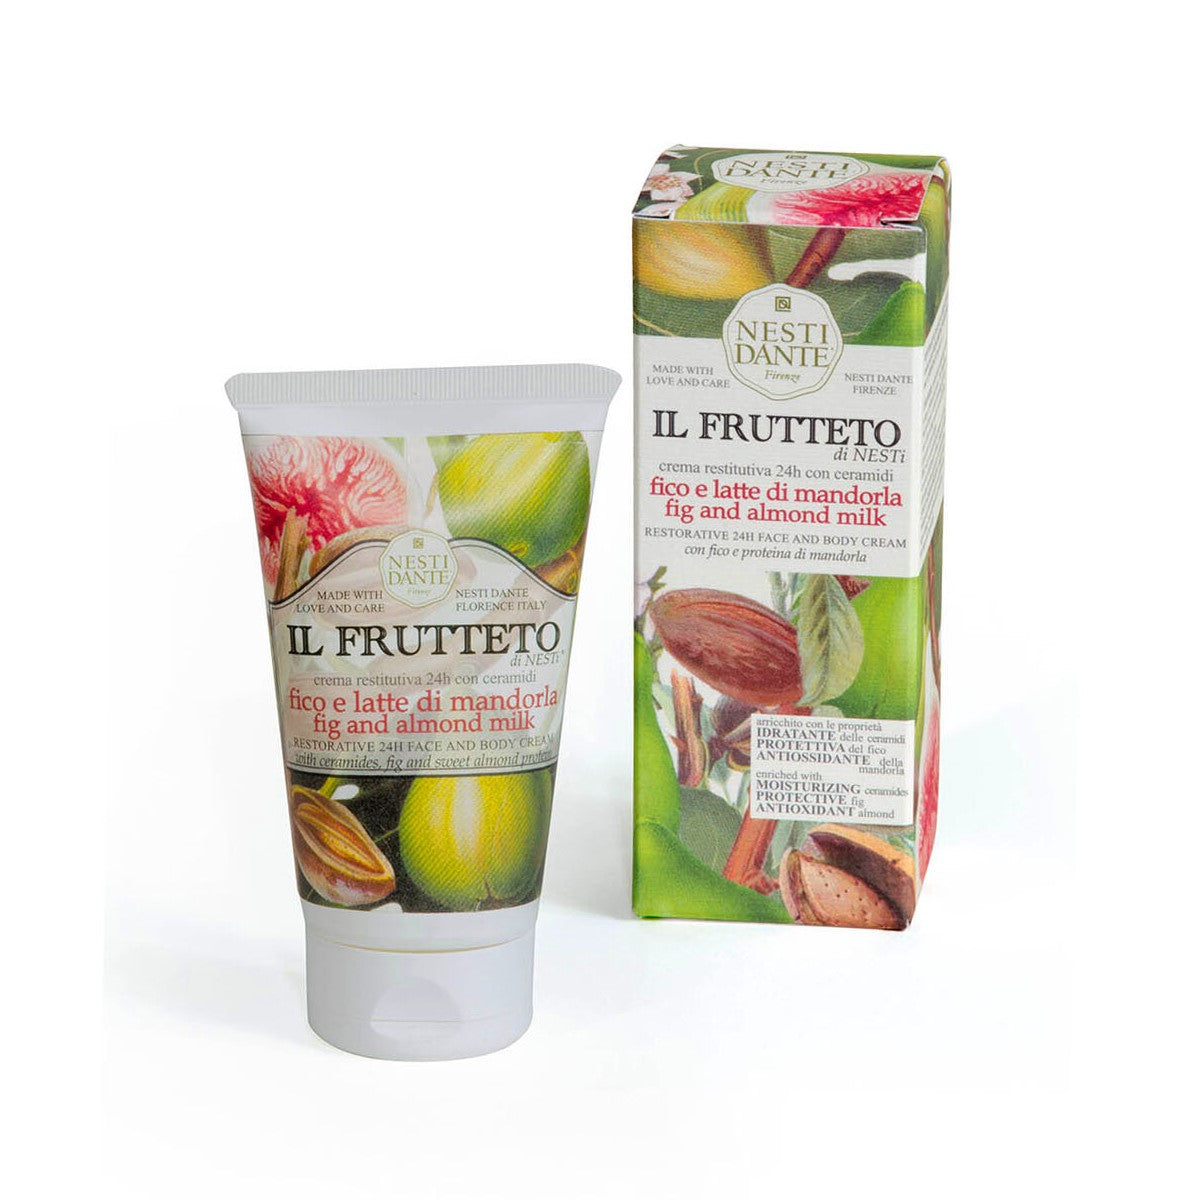 Primary Image of Il Frutteto Fig and Almond Milk Face and Body Cream